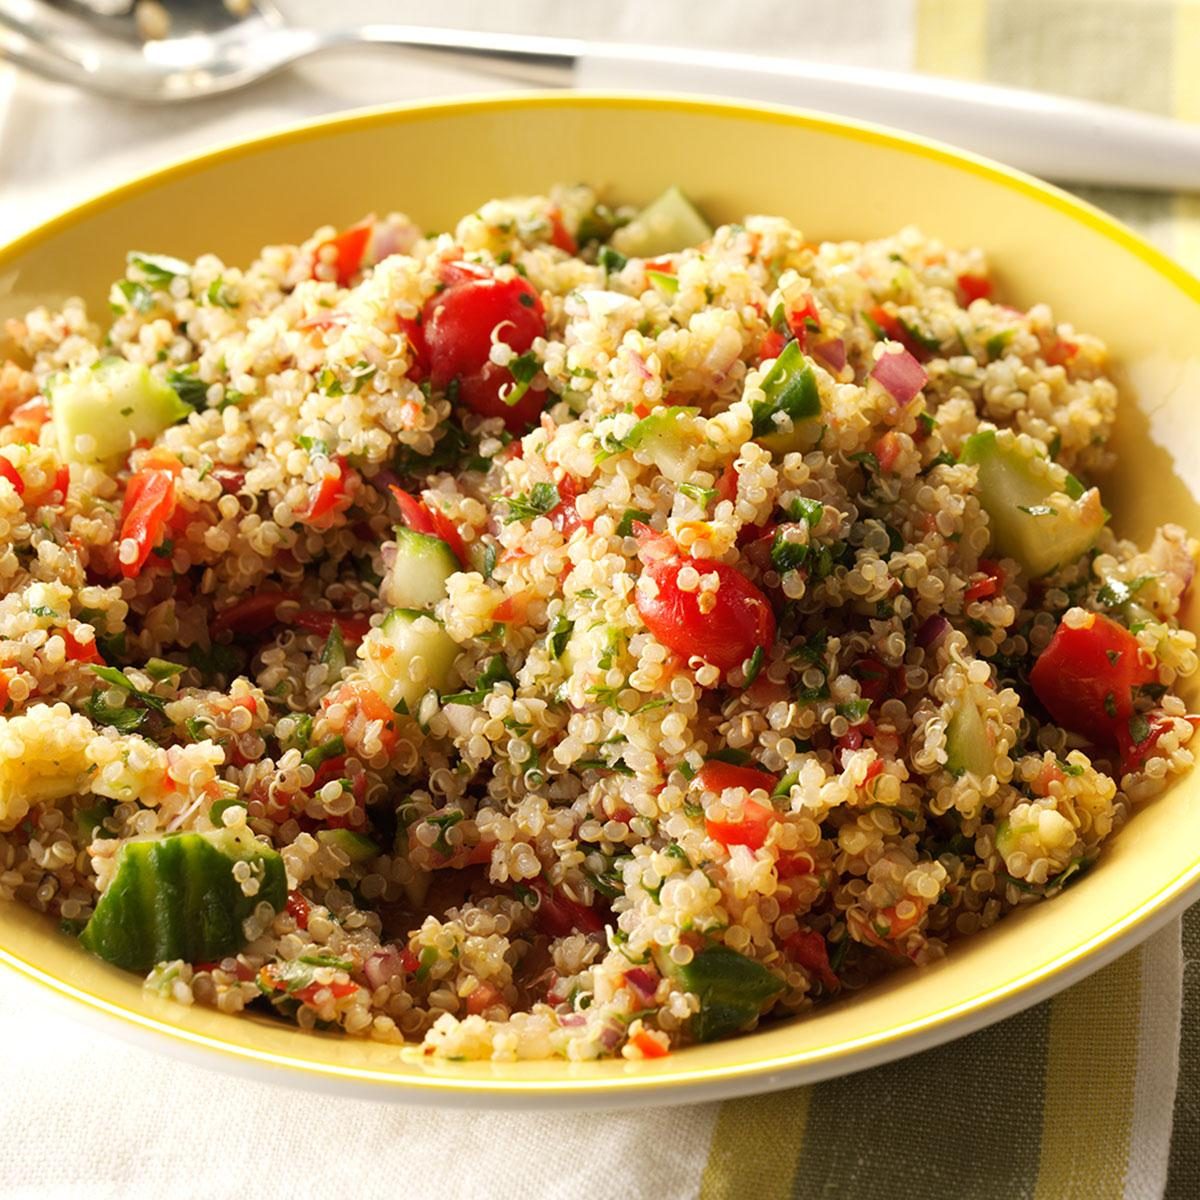 Quinoa Tabbouleh Salad Recipe: How to Make It